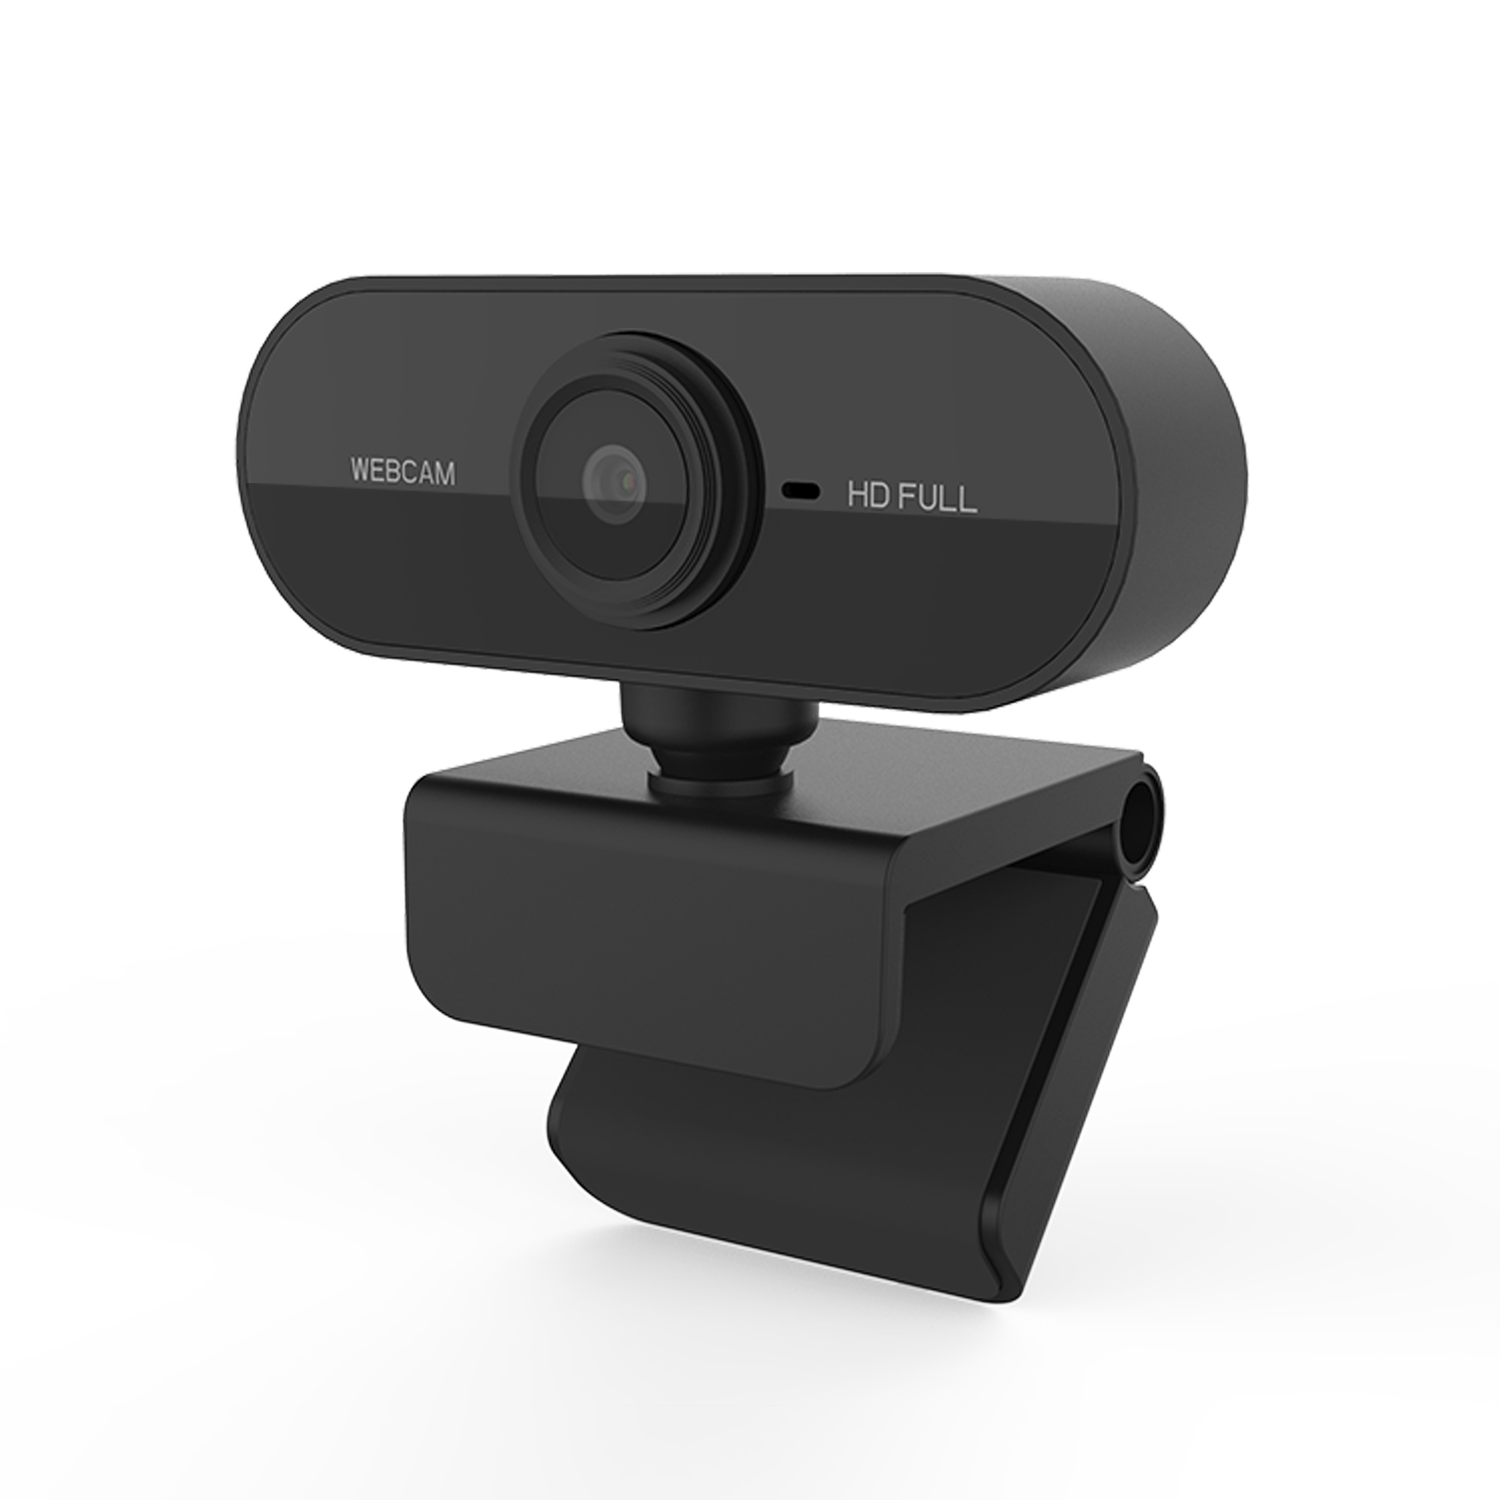 HD 1080P Webcam Mini Computer PC Webcamera with USB Plug Rotatable Cameras for Live Broadcast Video Calling Conference Work Car DVR - Auto GoShop